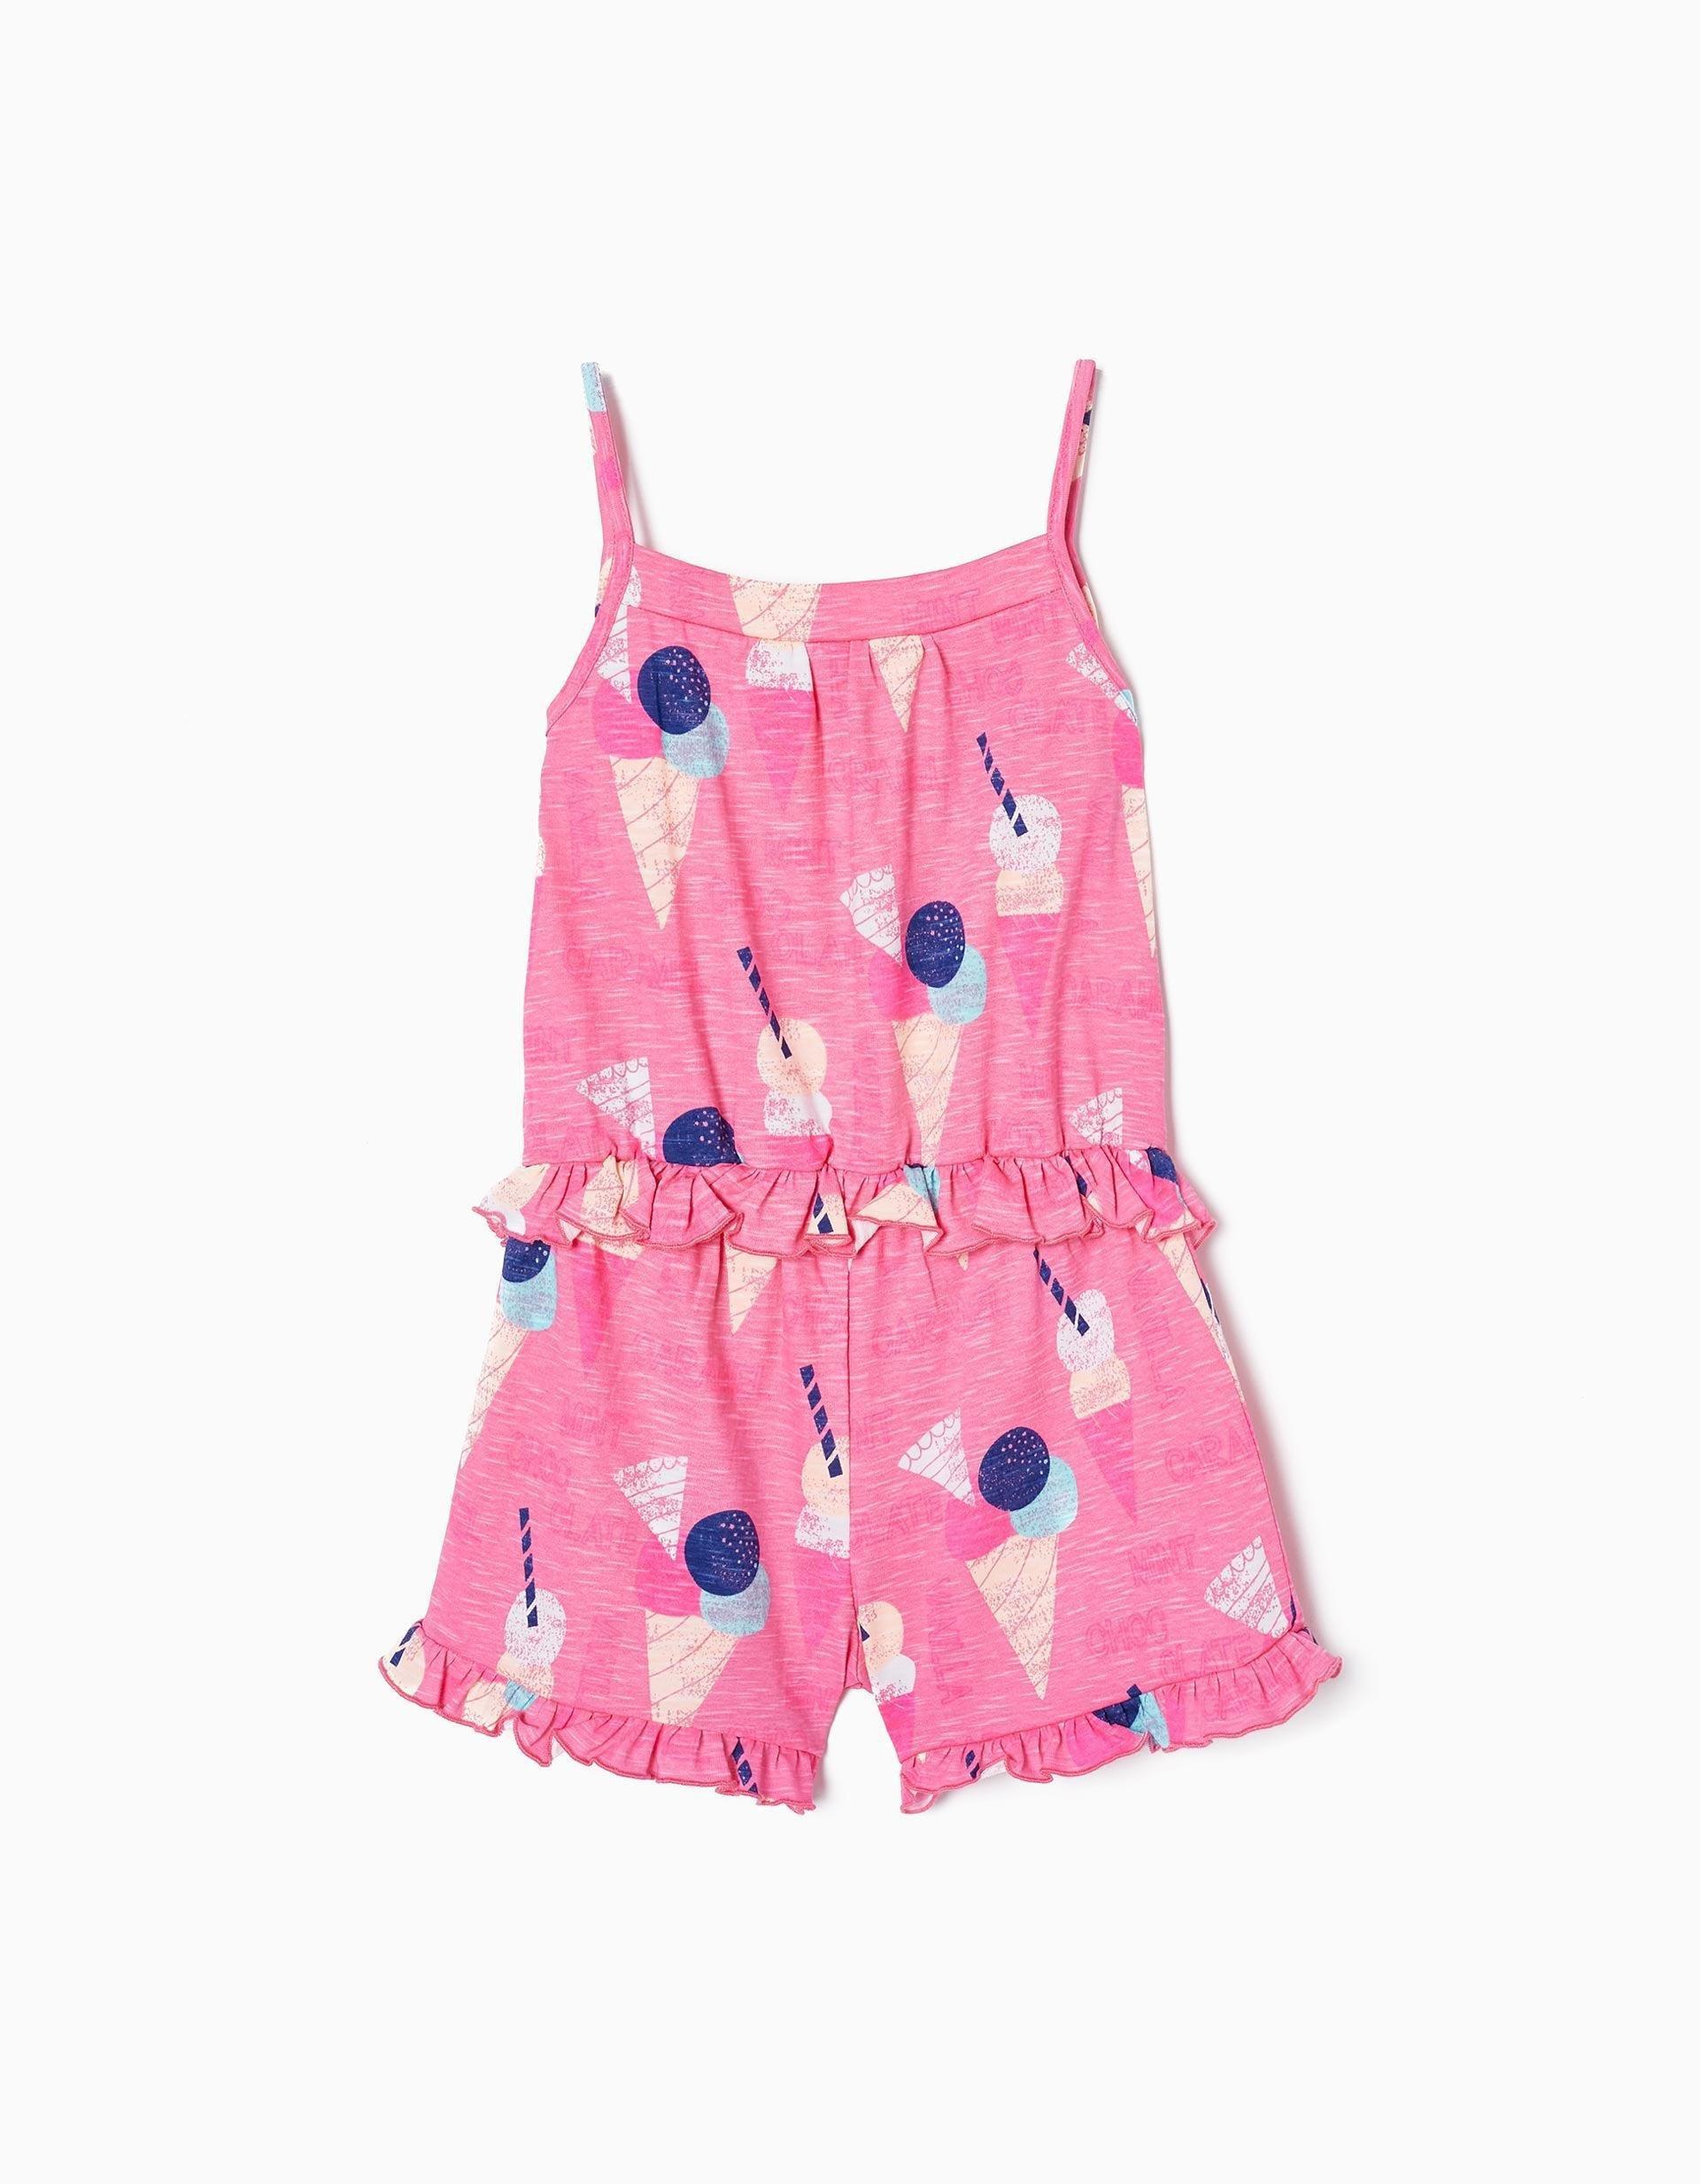 Gant - Pink Printed Jumpsuit, Kids Girls